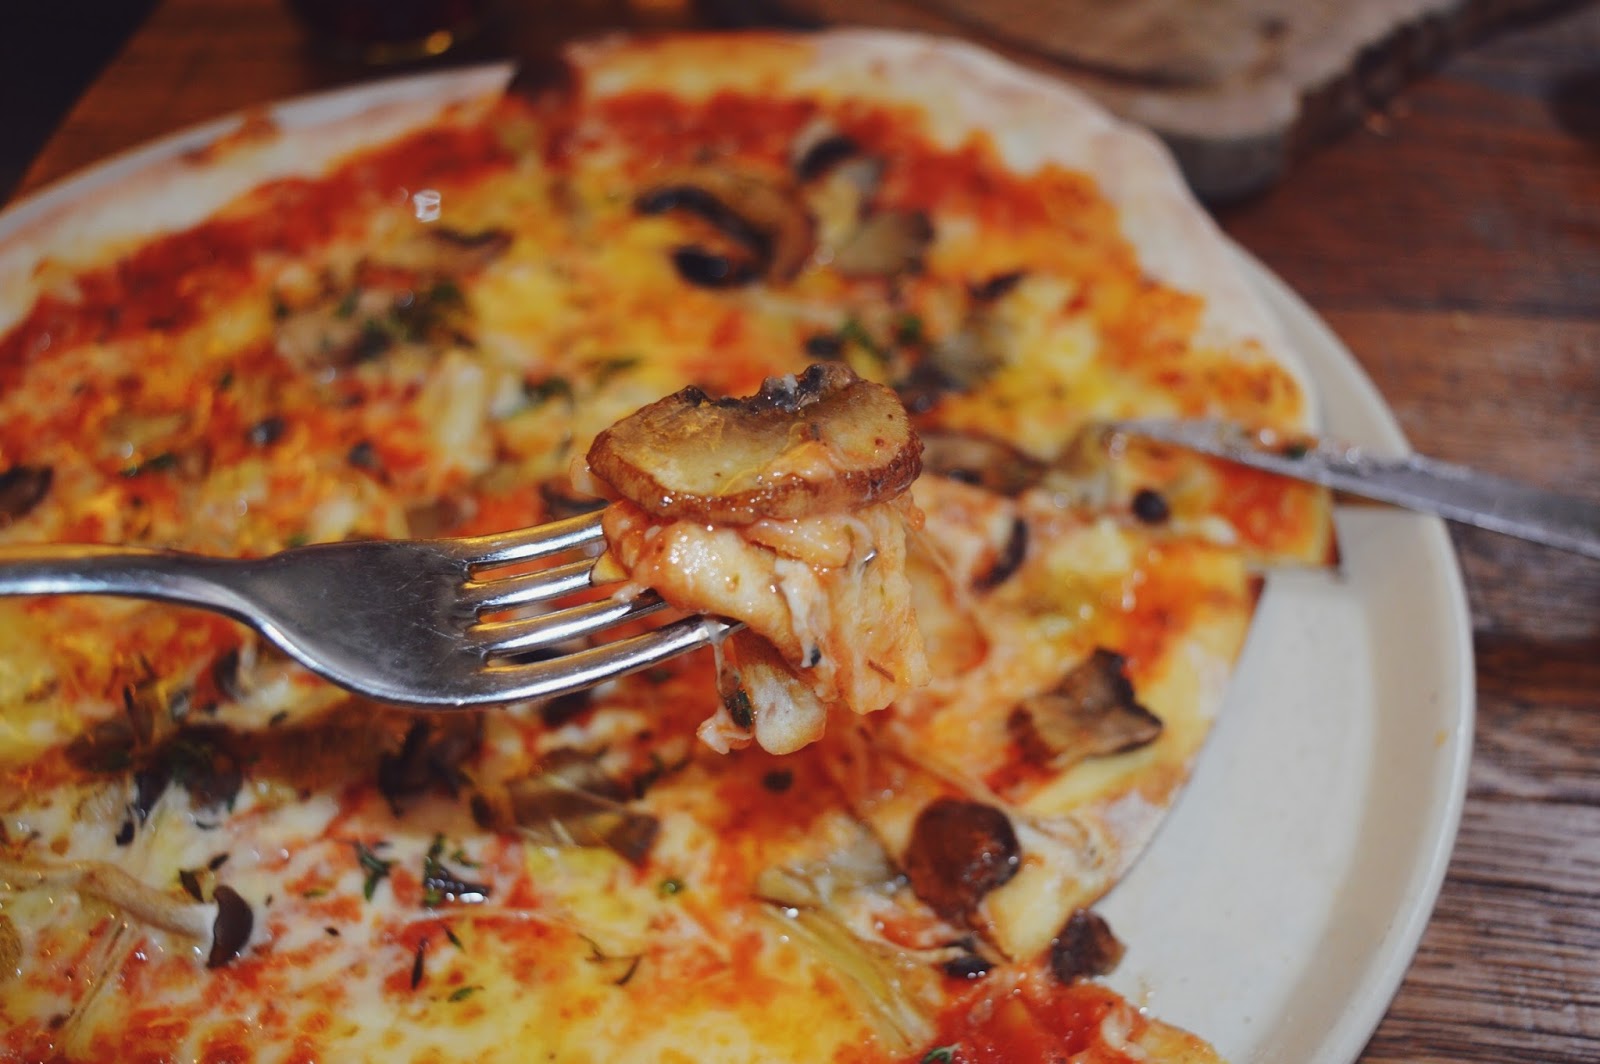 Wildwood Salisbury review, FashionFake, UK food blogs, wild mushroom pizza 